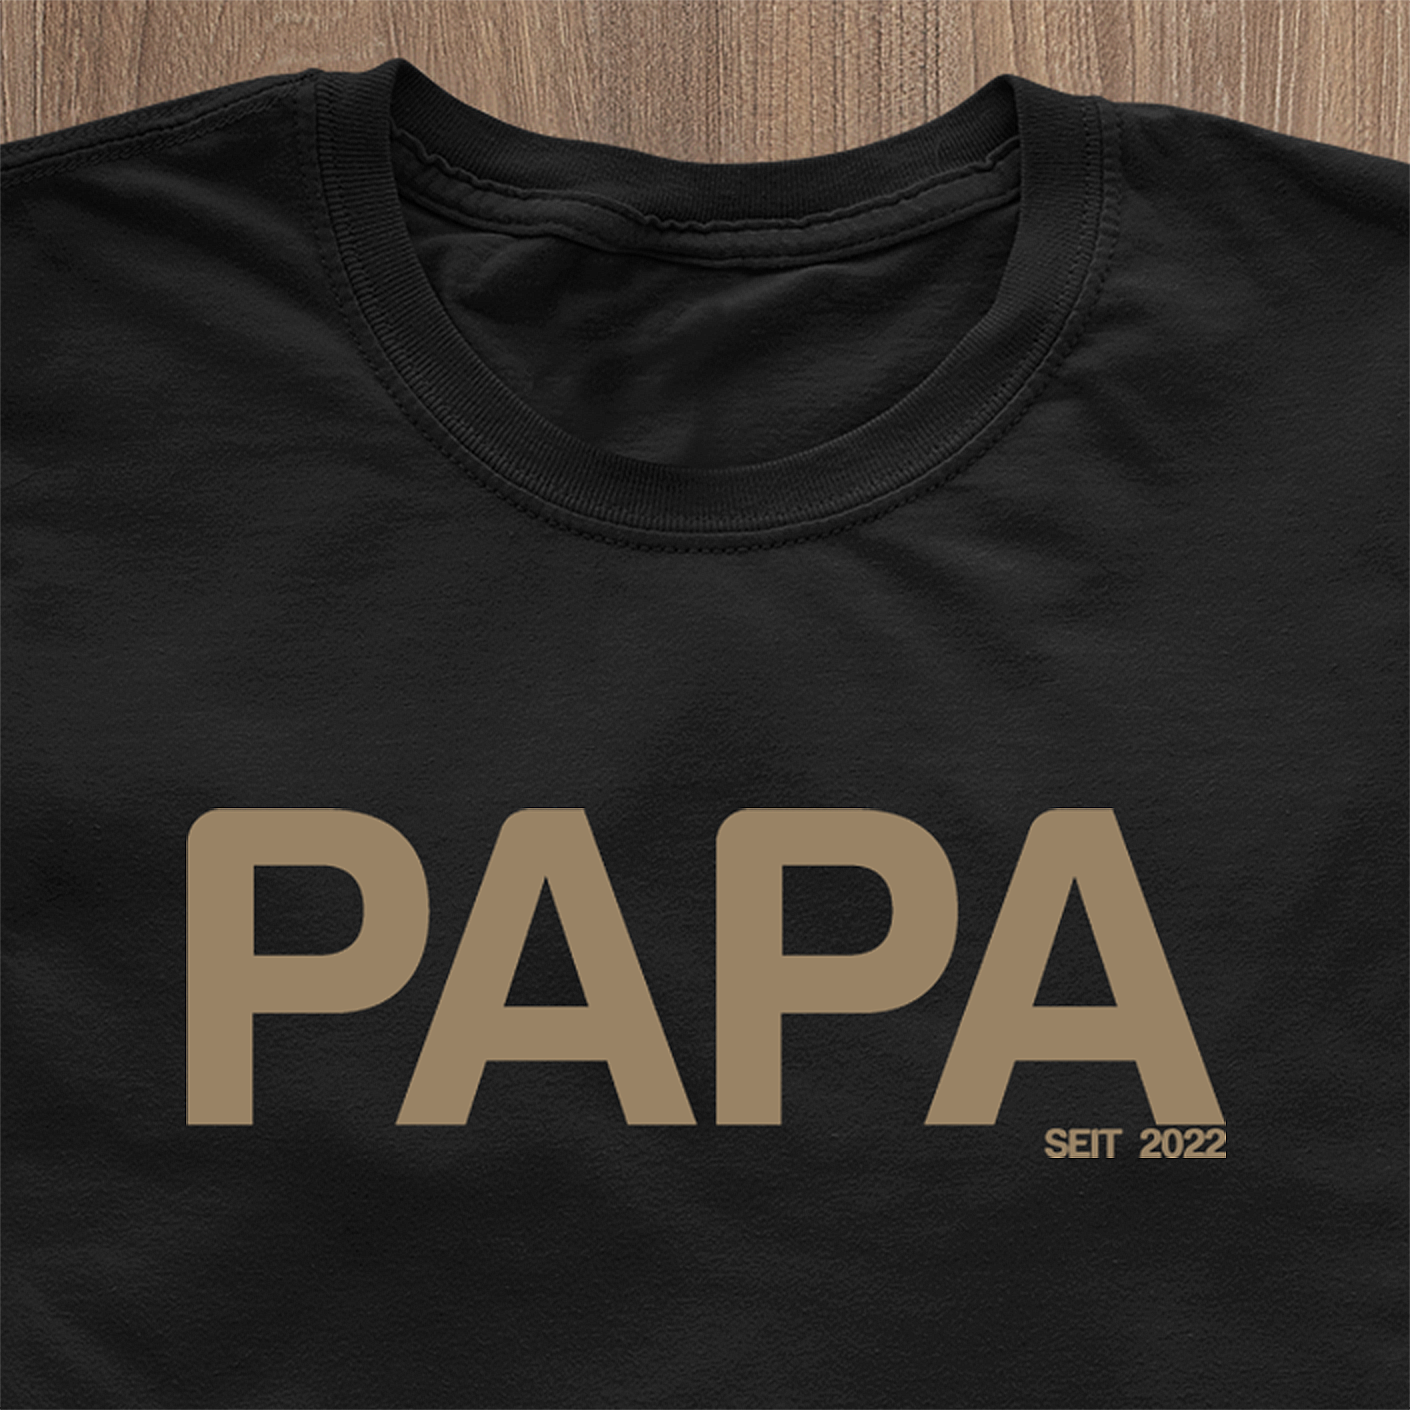 PAPA SEIT... T-Shirt Modern Edition navy - Datum personalisierbar